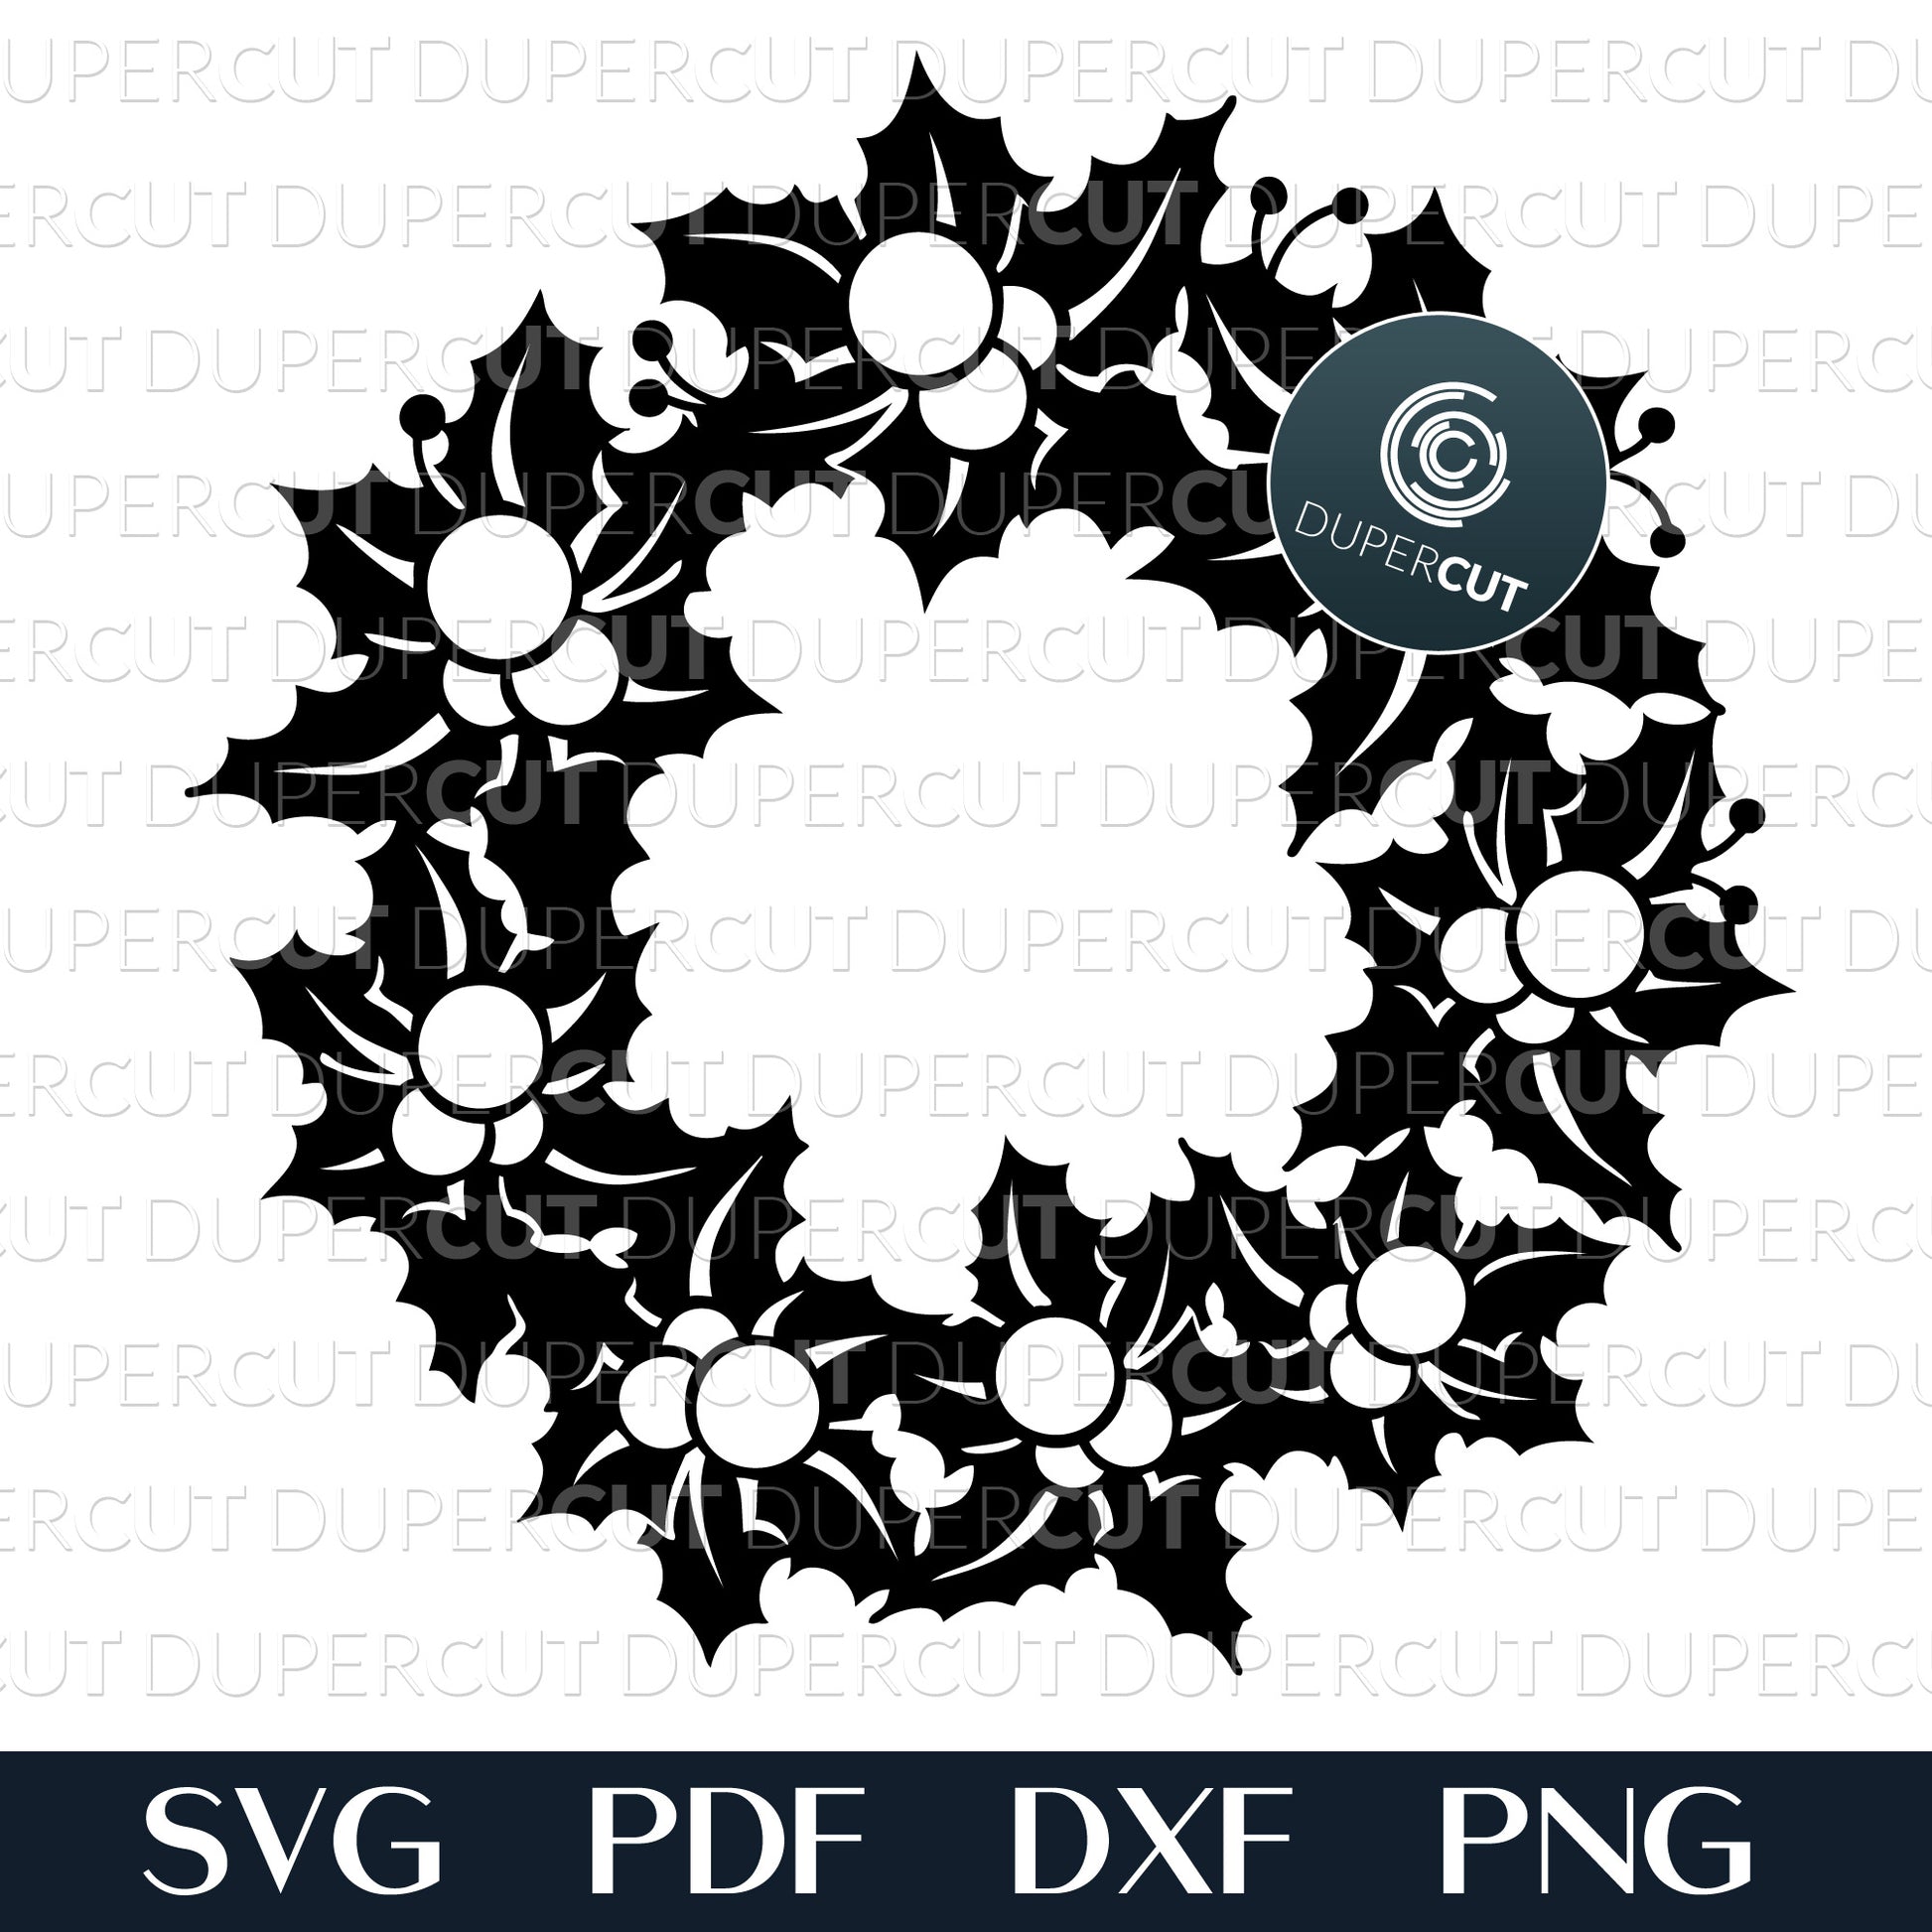 Christmas mistletoe wreath - SVG DXF PNG files for laser cutting, Glowforge, Cricut, Silhouette Cameo, CNC plasma machines